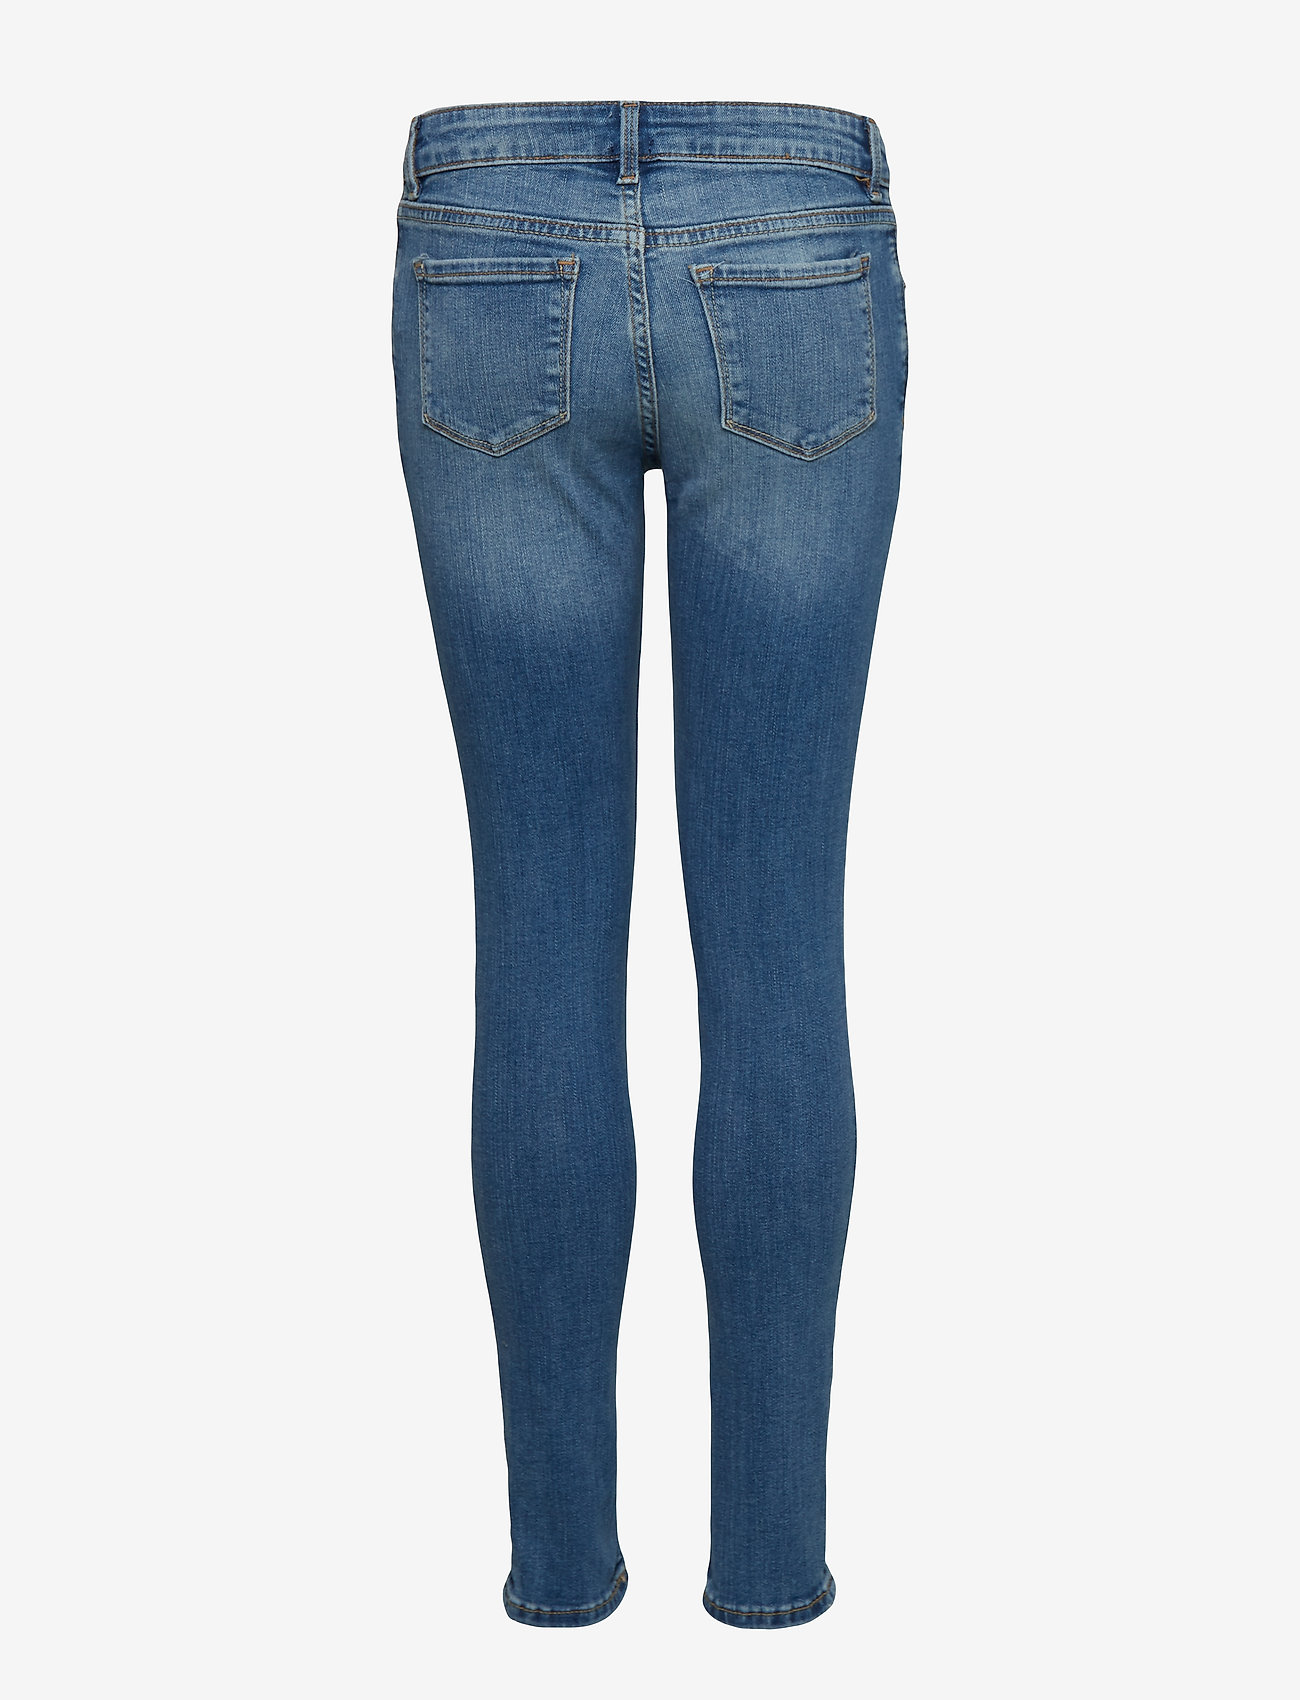 gap indigo jeans